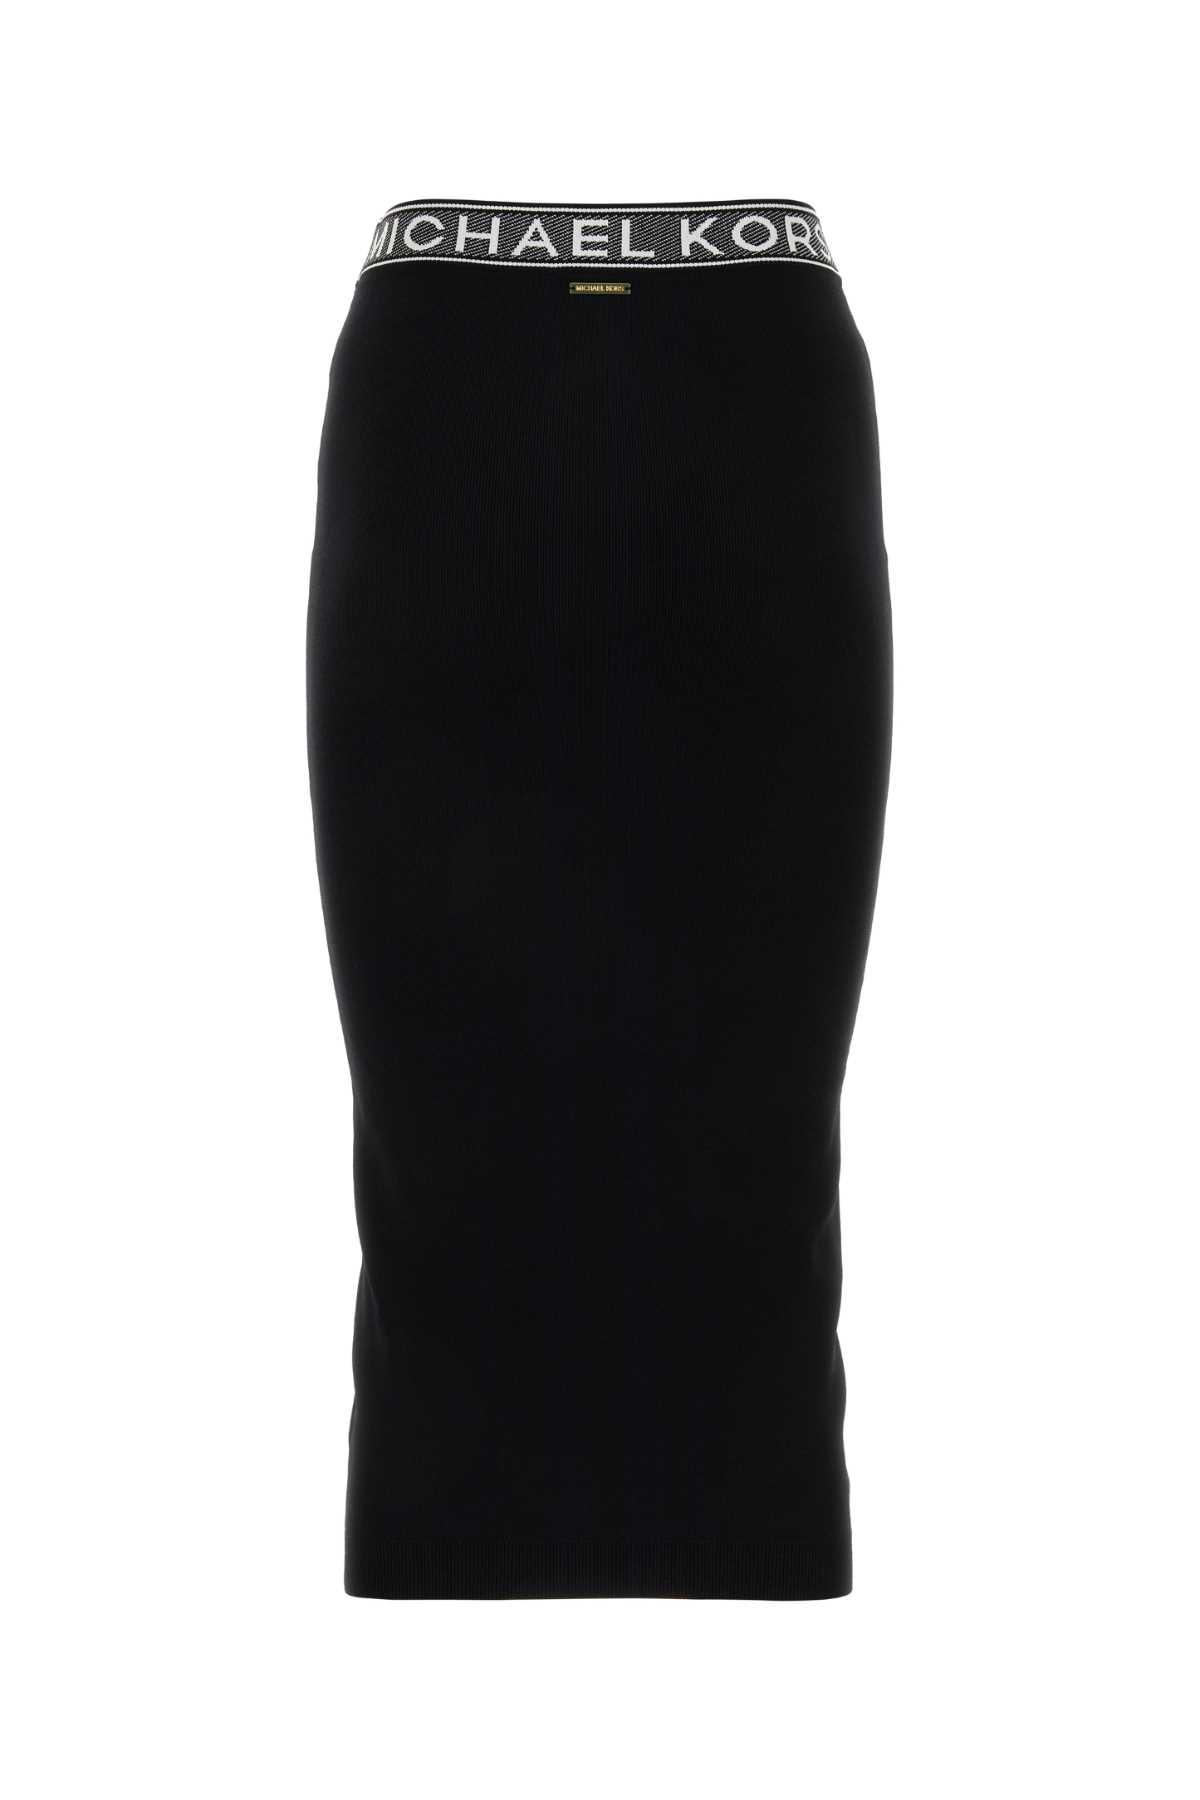 Michael Kors Black Stretch Viscose Blend Skirt